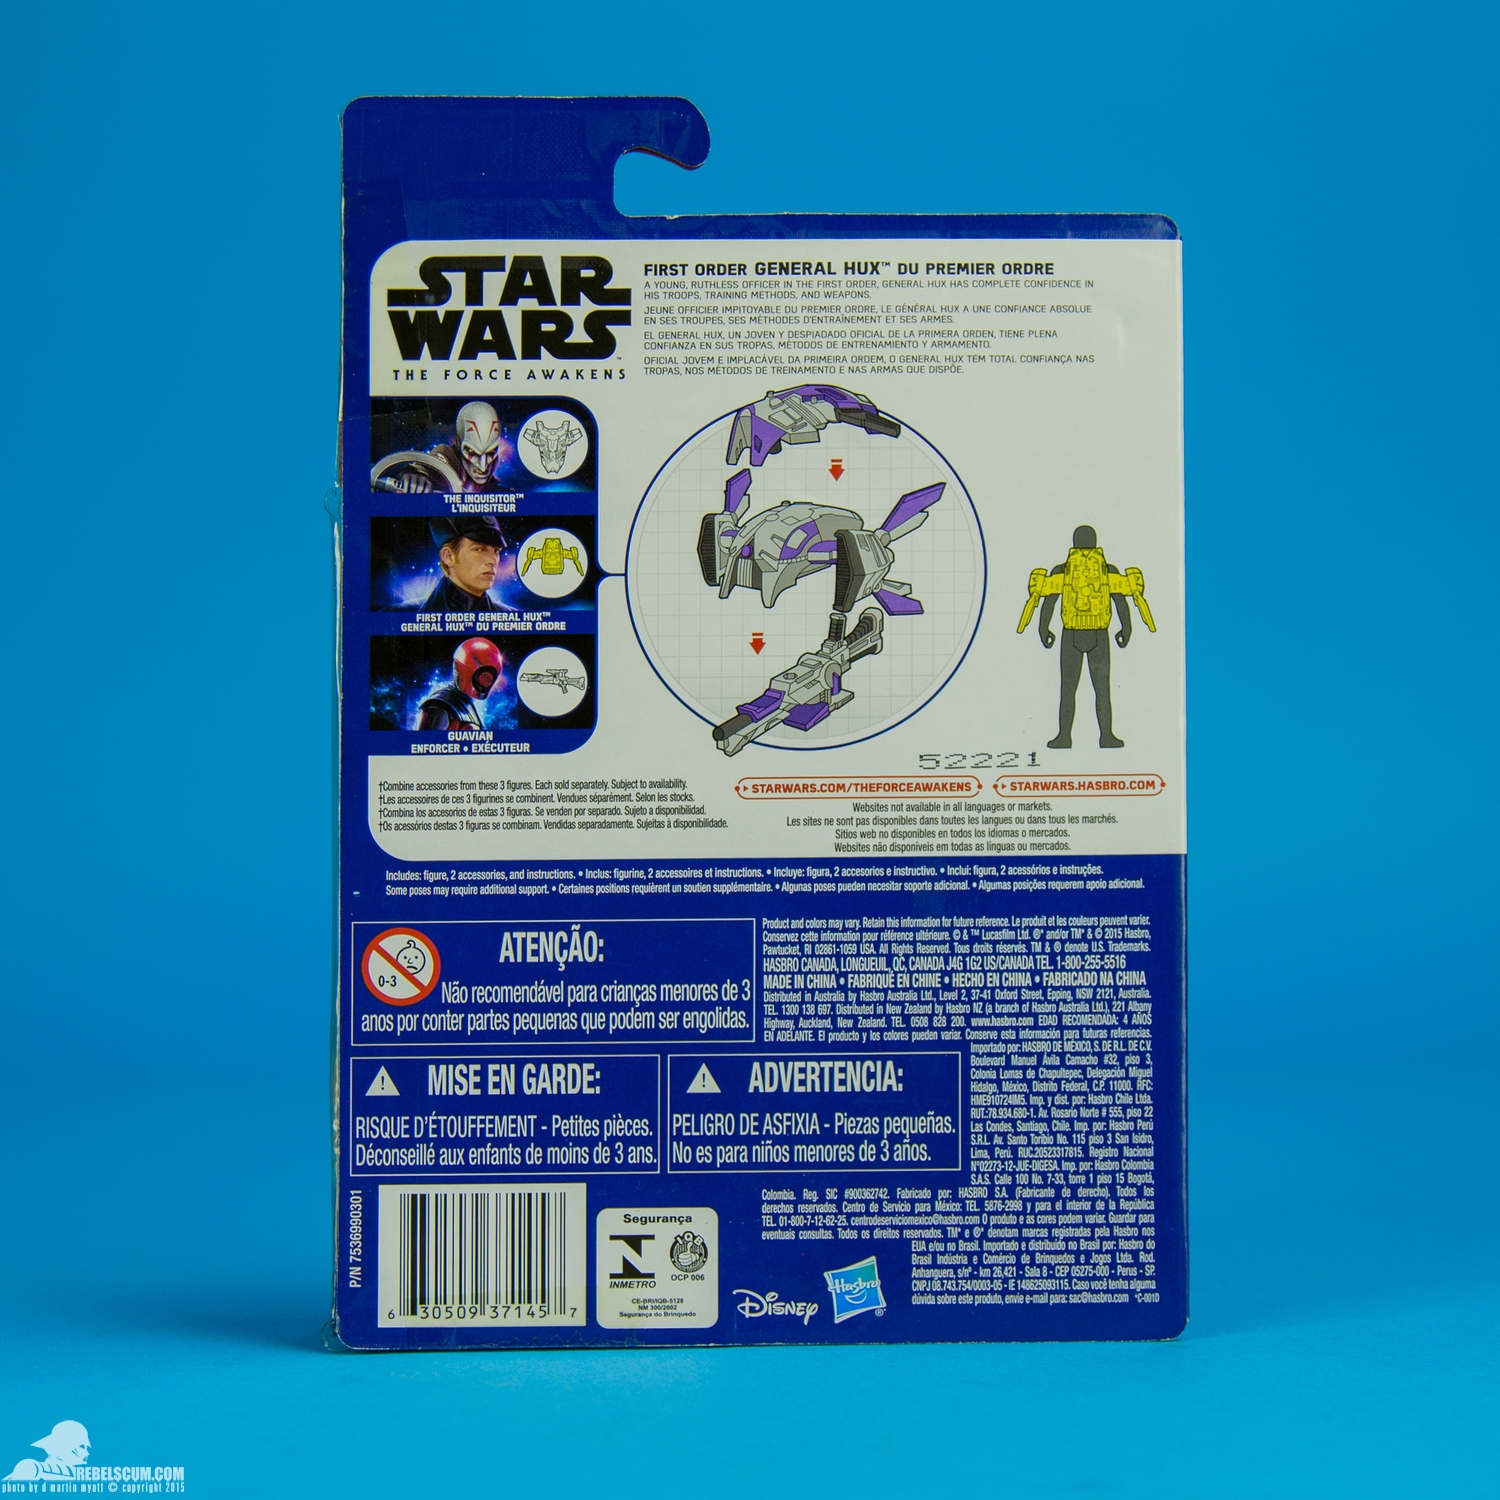 First-Order-General-Hux-Star-Wars-The-Force-Awakens-014.jpg